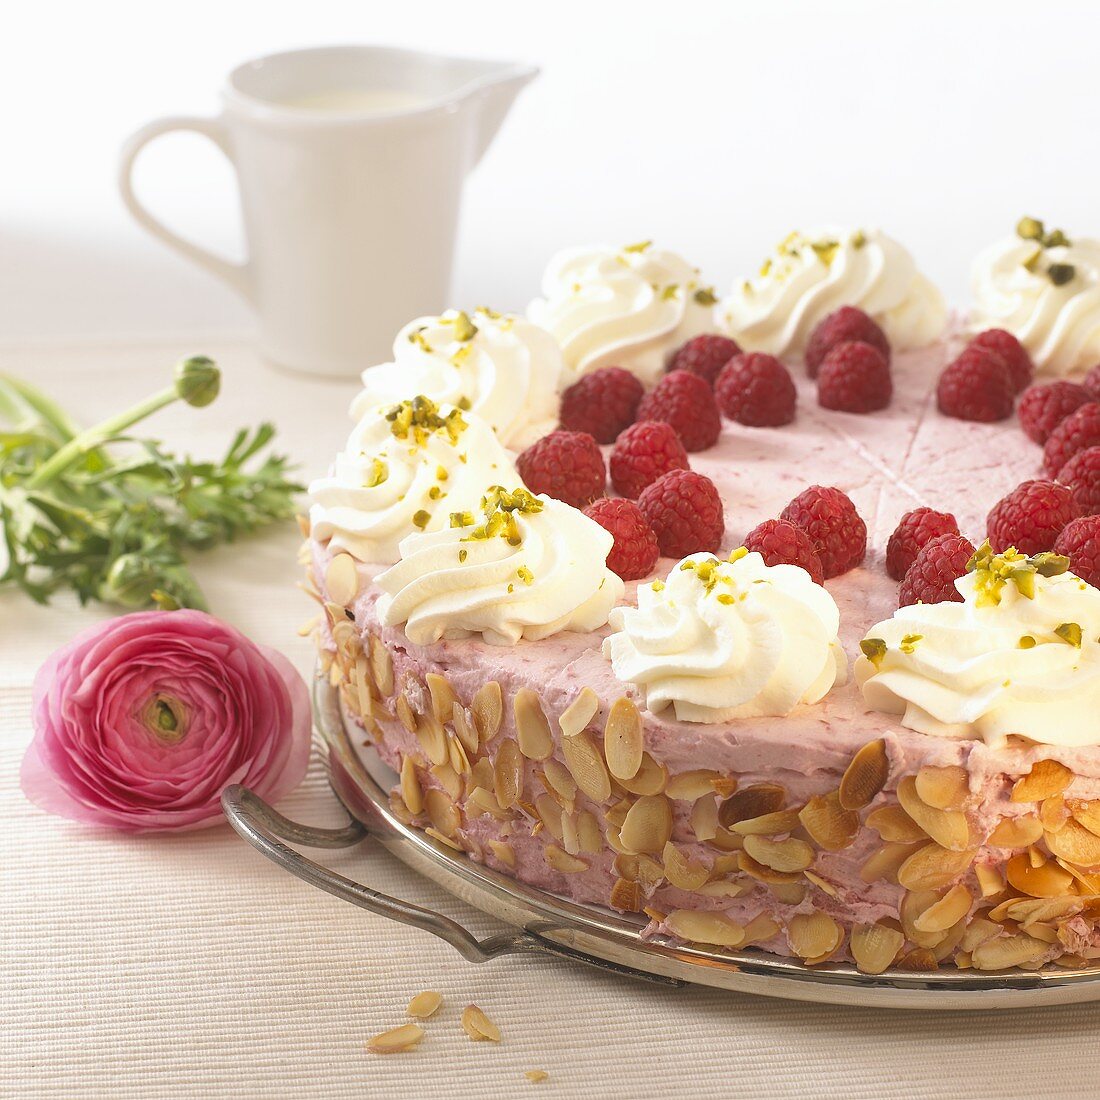 Raspberry cream cake with flaked almonds